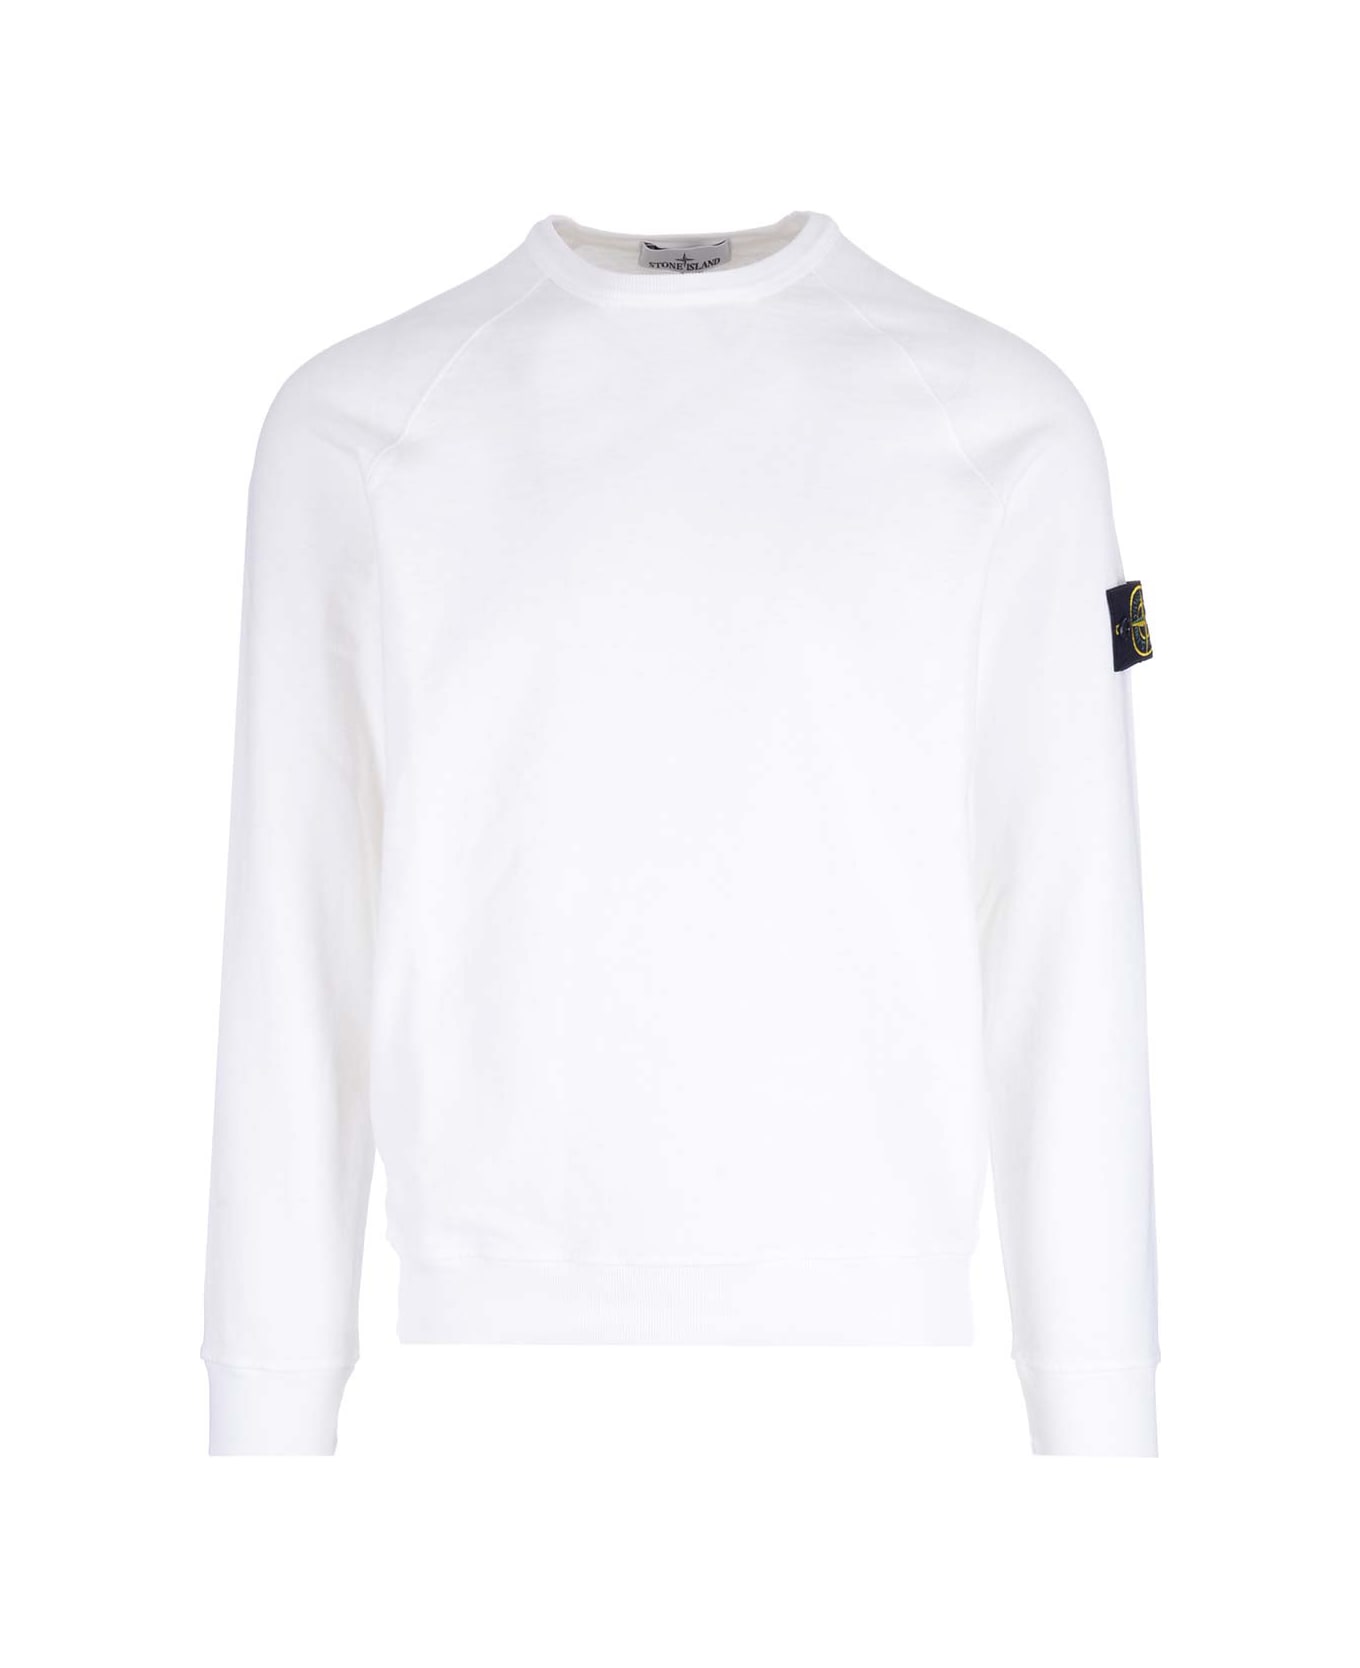 Stone Island Cotton Crewneck Sweatshirt - White